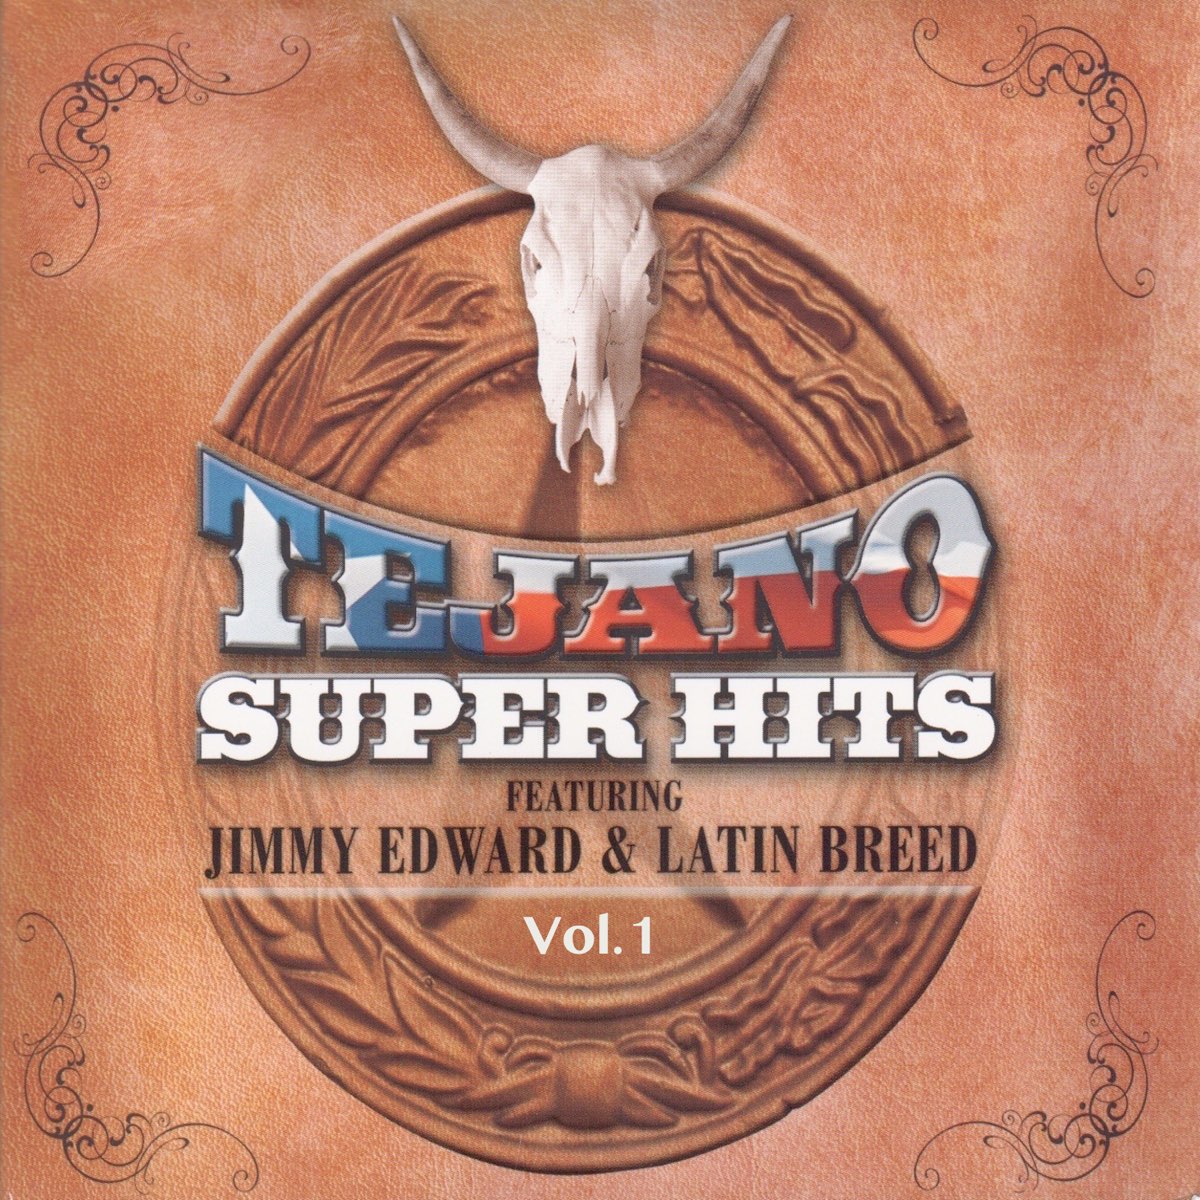 ‎Tejano Super Hits Vol. 1 by Jimmy Edward & Latin Breed on Apple Music